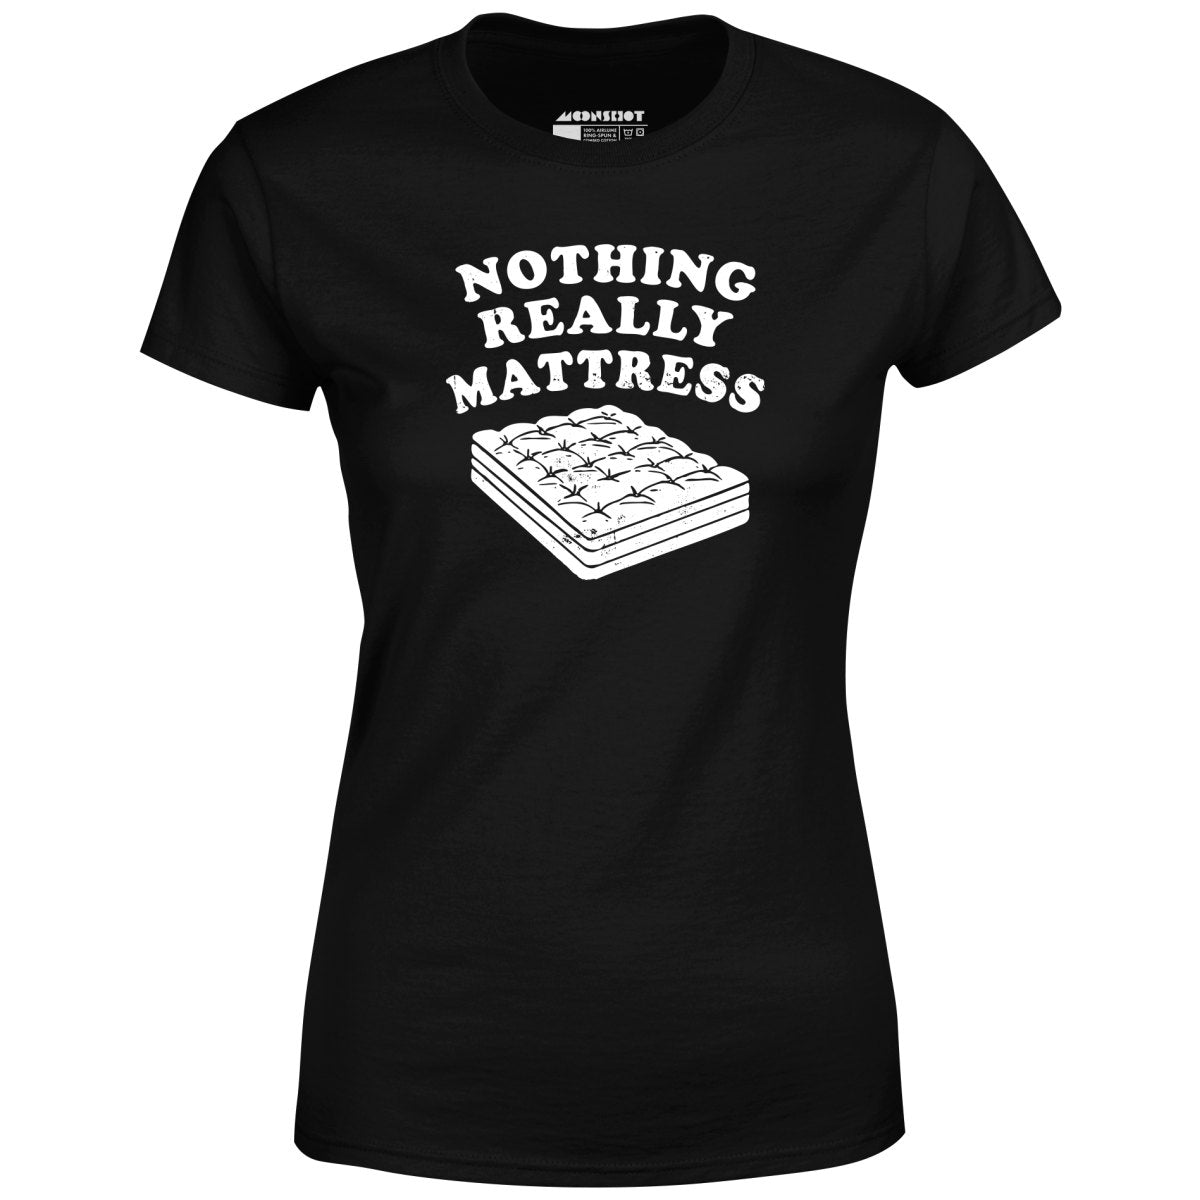 Nothing Really Mattress - Women's T-Shirt